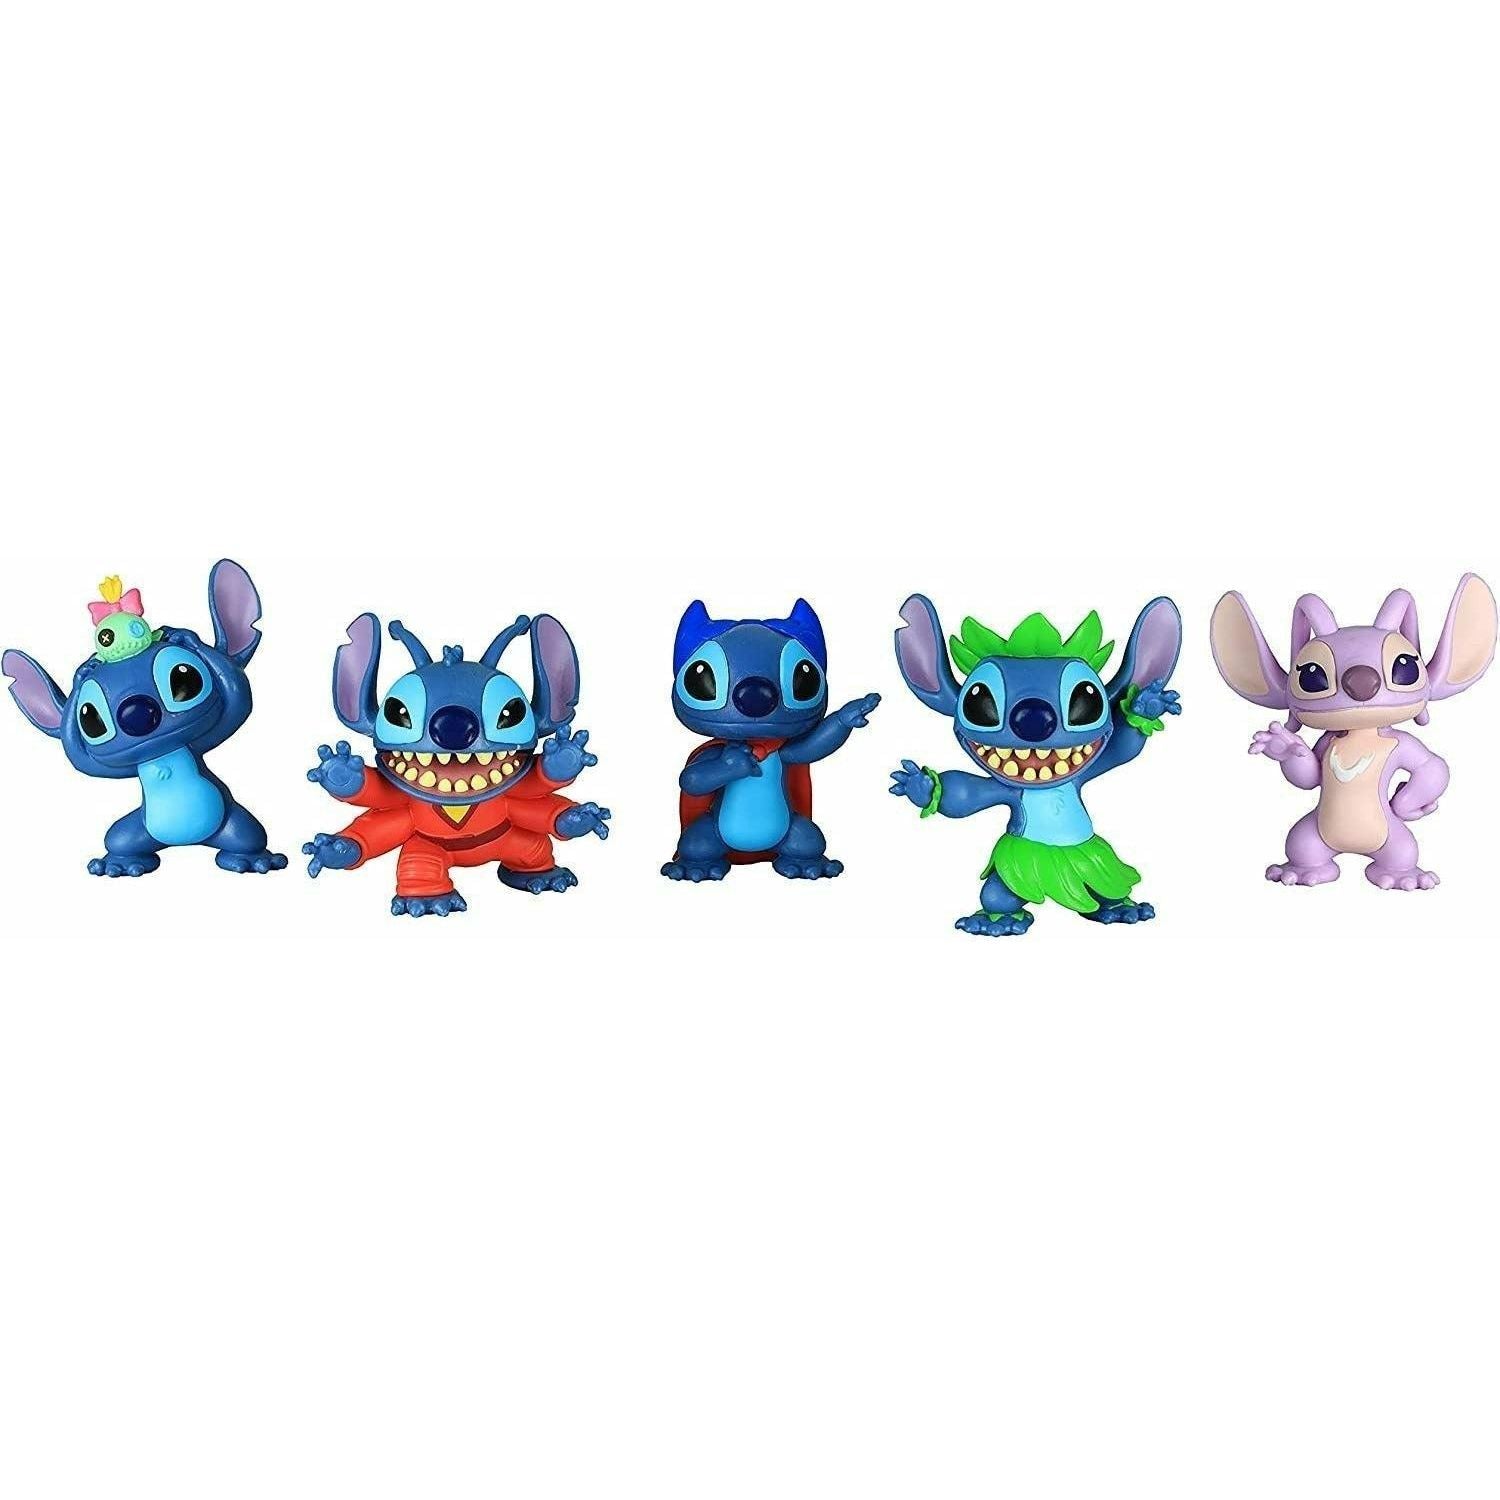 Disney’s Lilo & Stitch Collectible Stitch Figure Set 5 Pieces - BumbleToys - 2-4 Years, Disney, Lilo & Stitch, OXE, Pre-Order